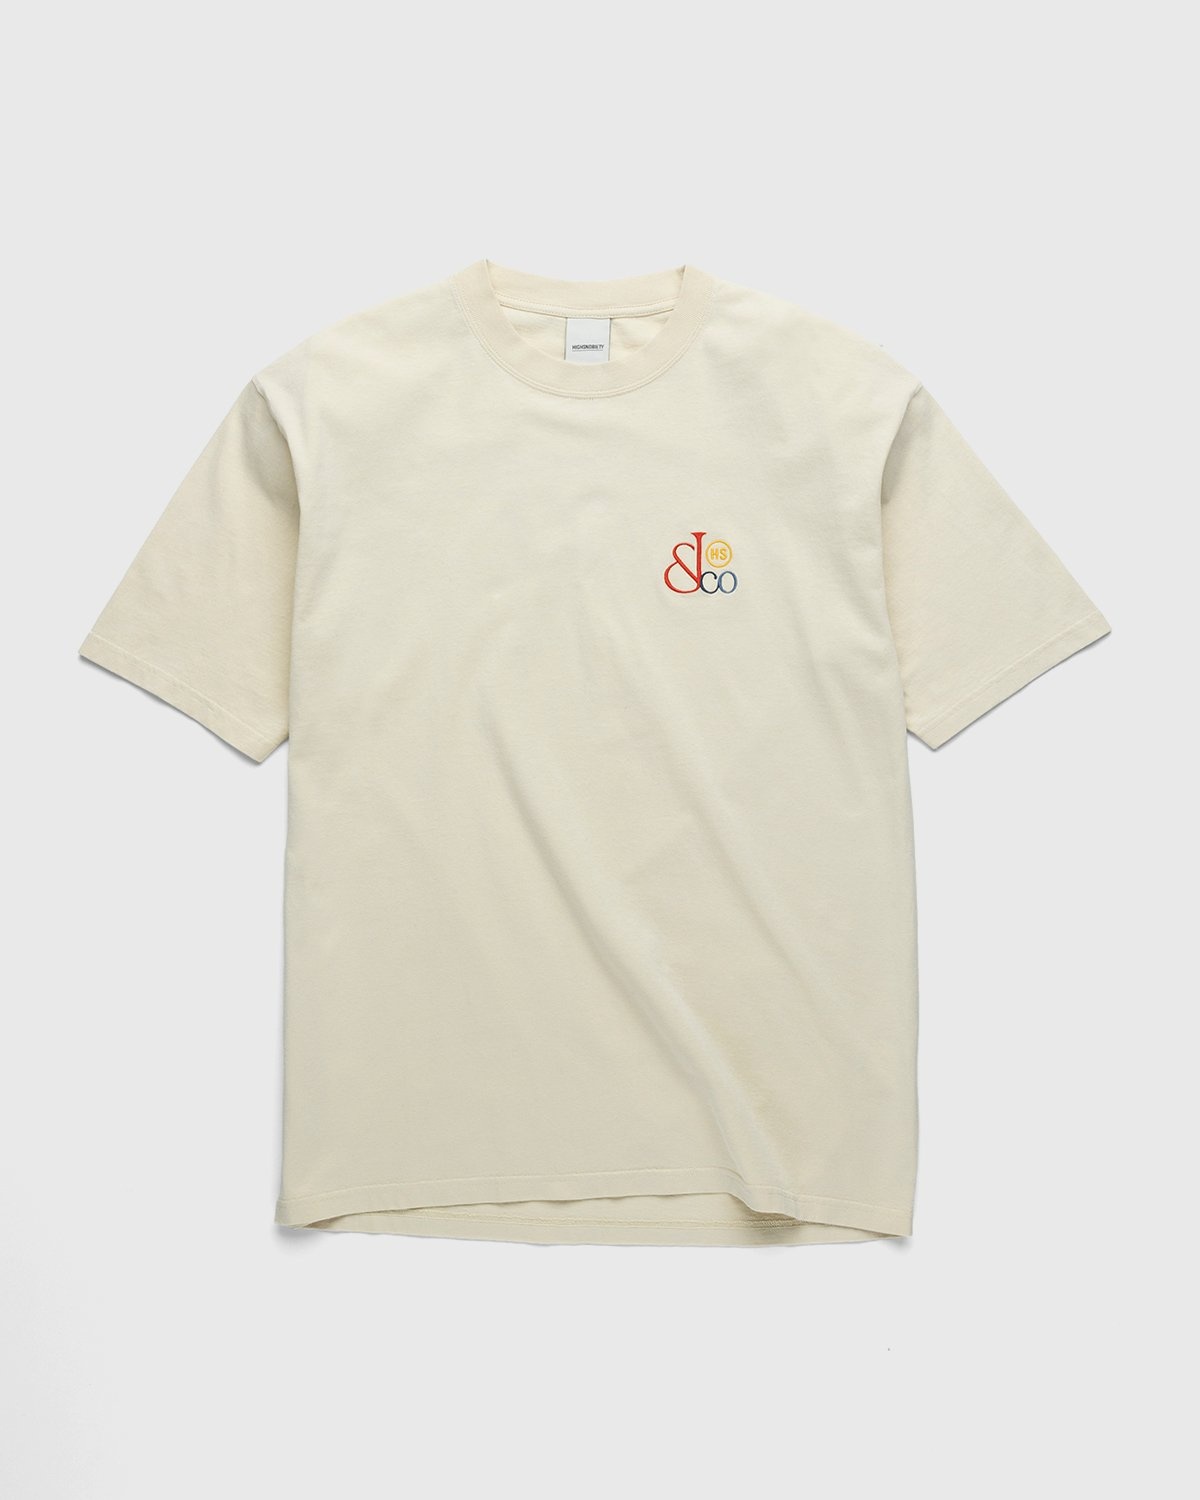 Jacob & Co. x Highsnobiety – Heavy Logo T-Shirt Beige | Highsnobiety Shop